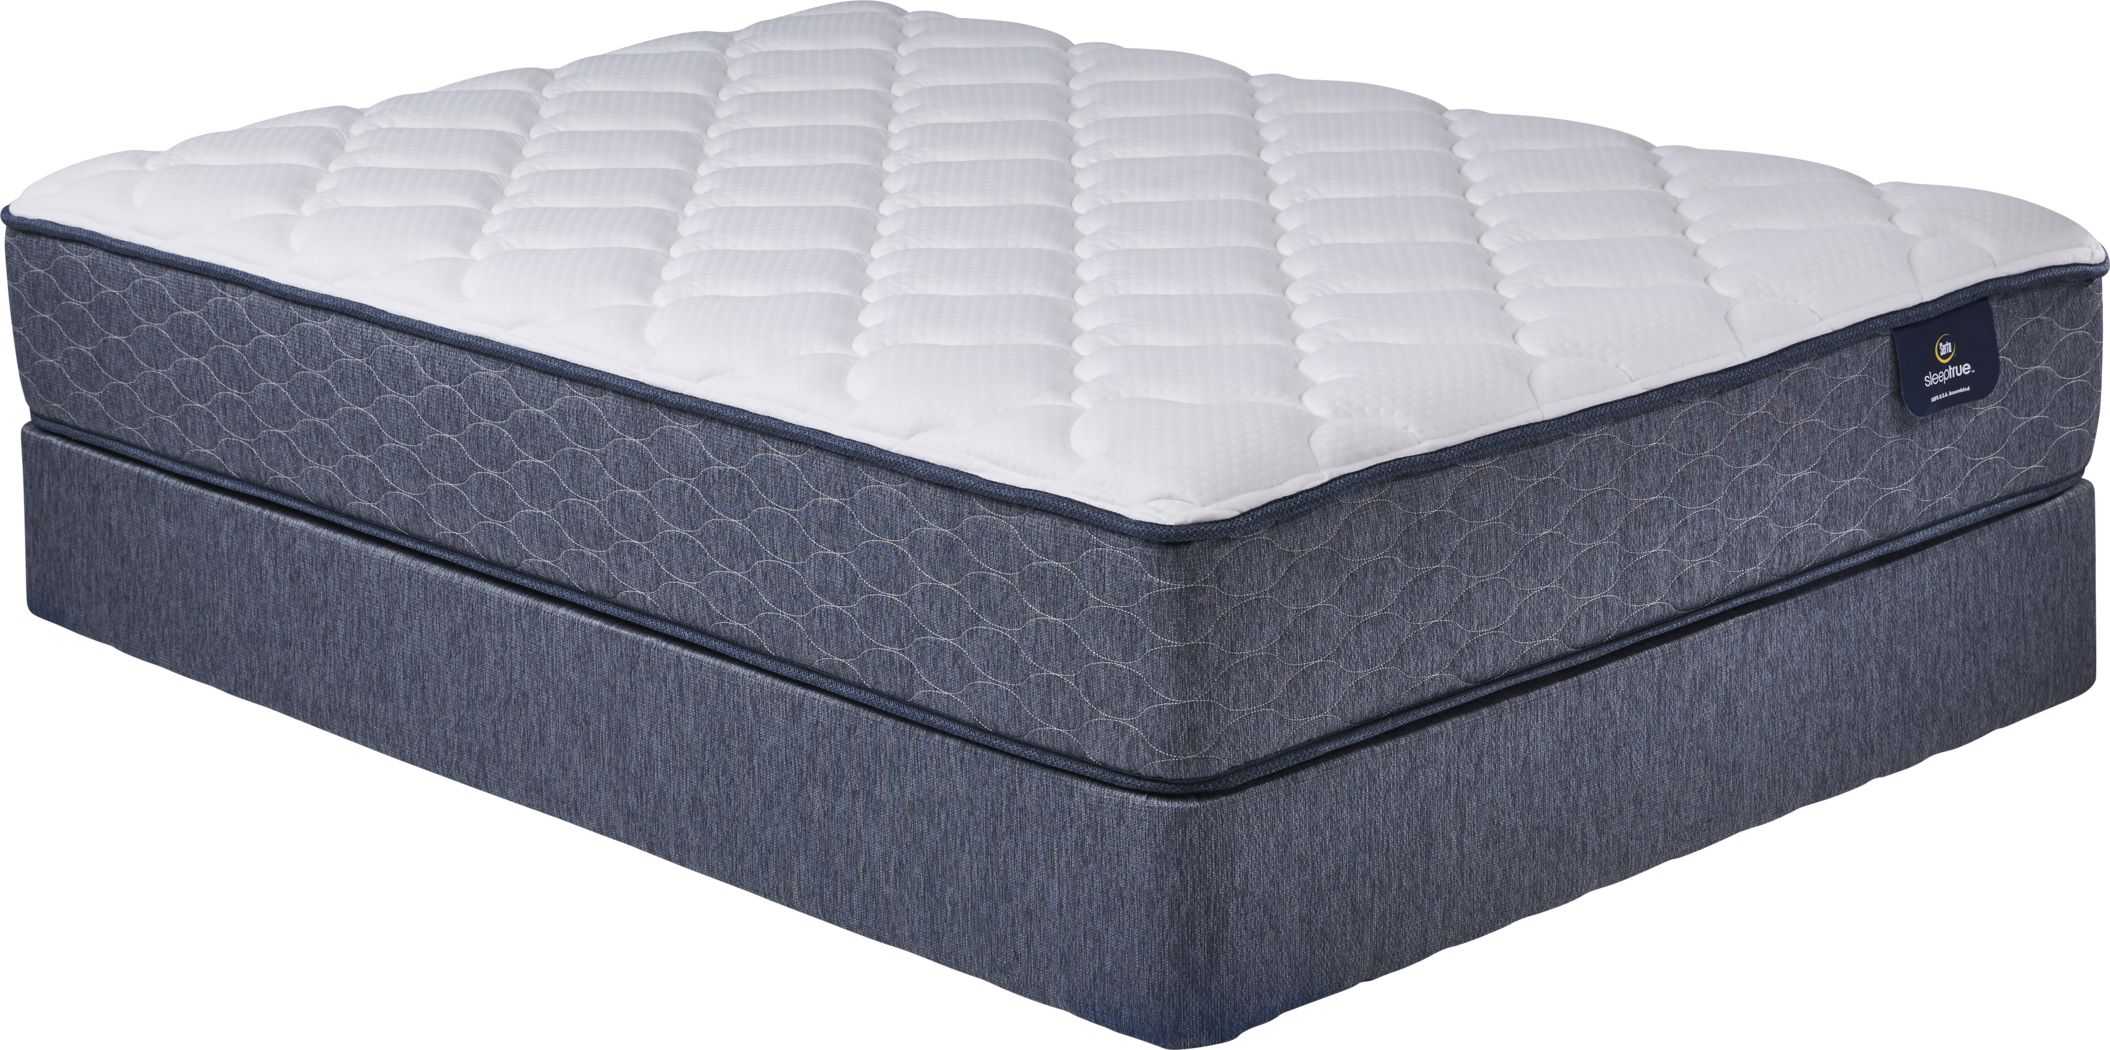 sheridan mattress topper review